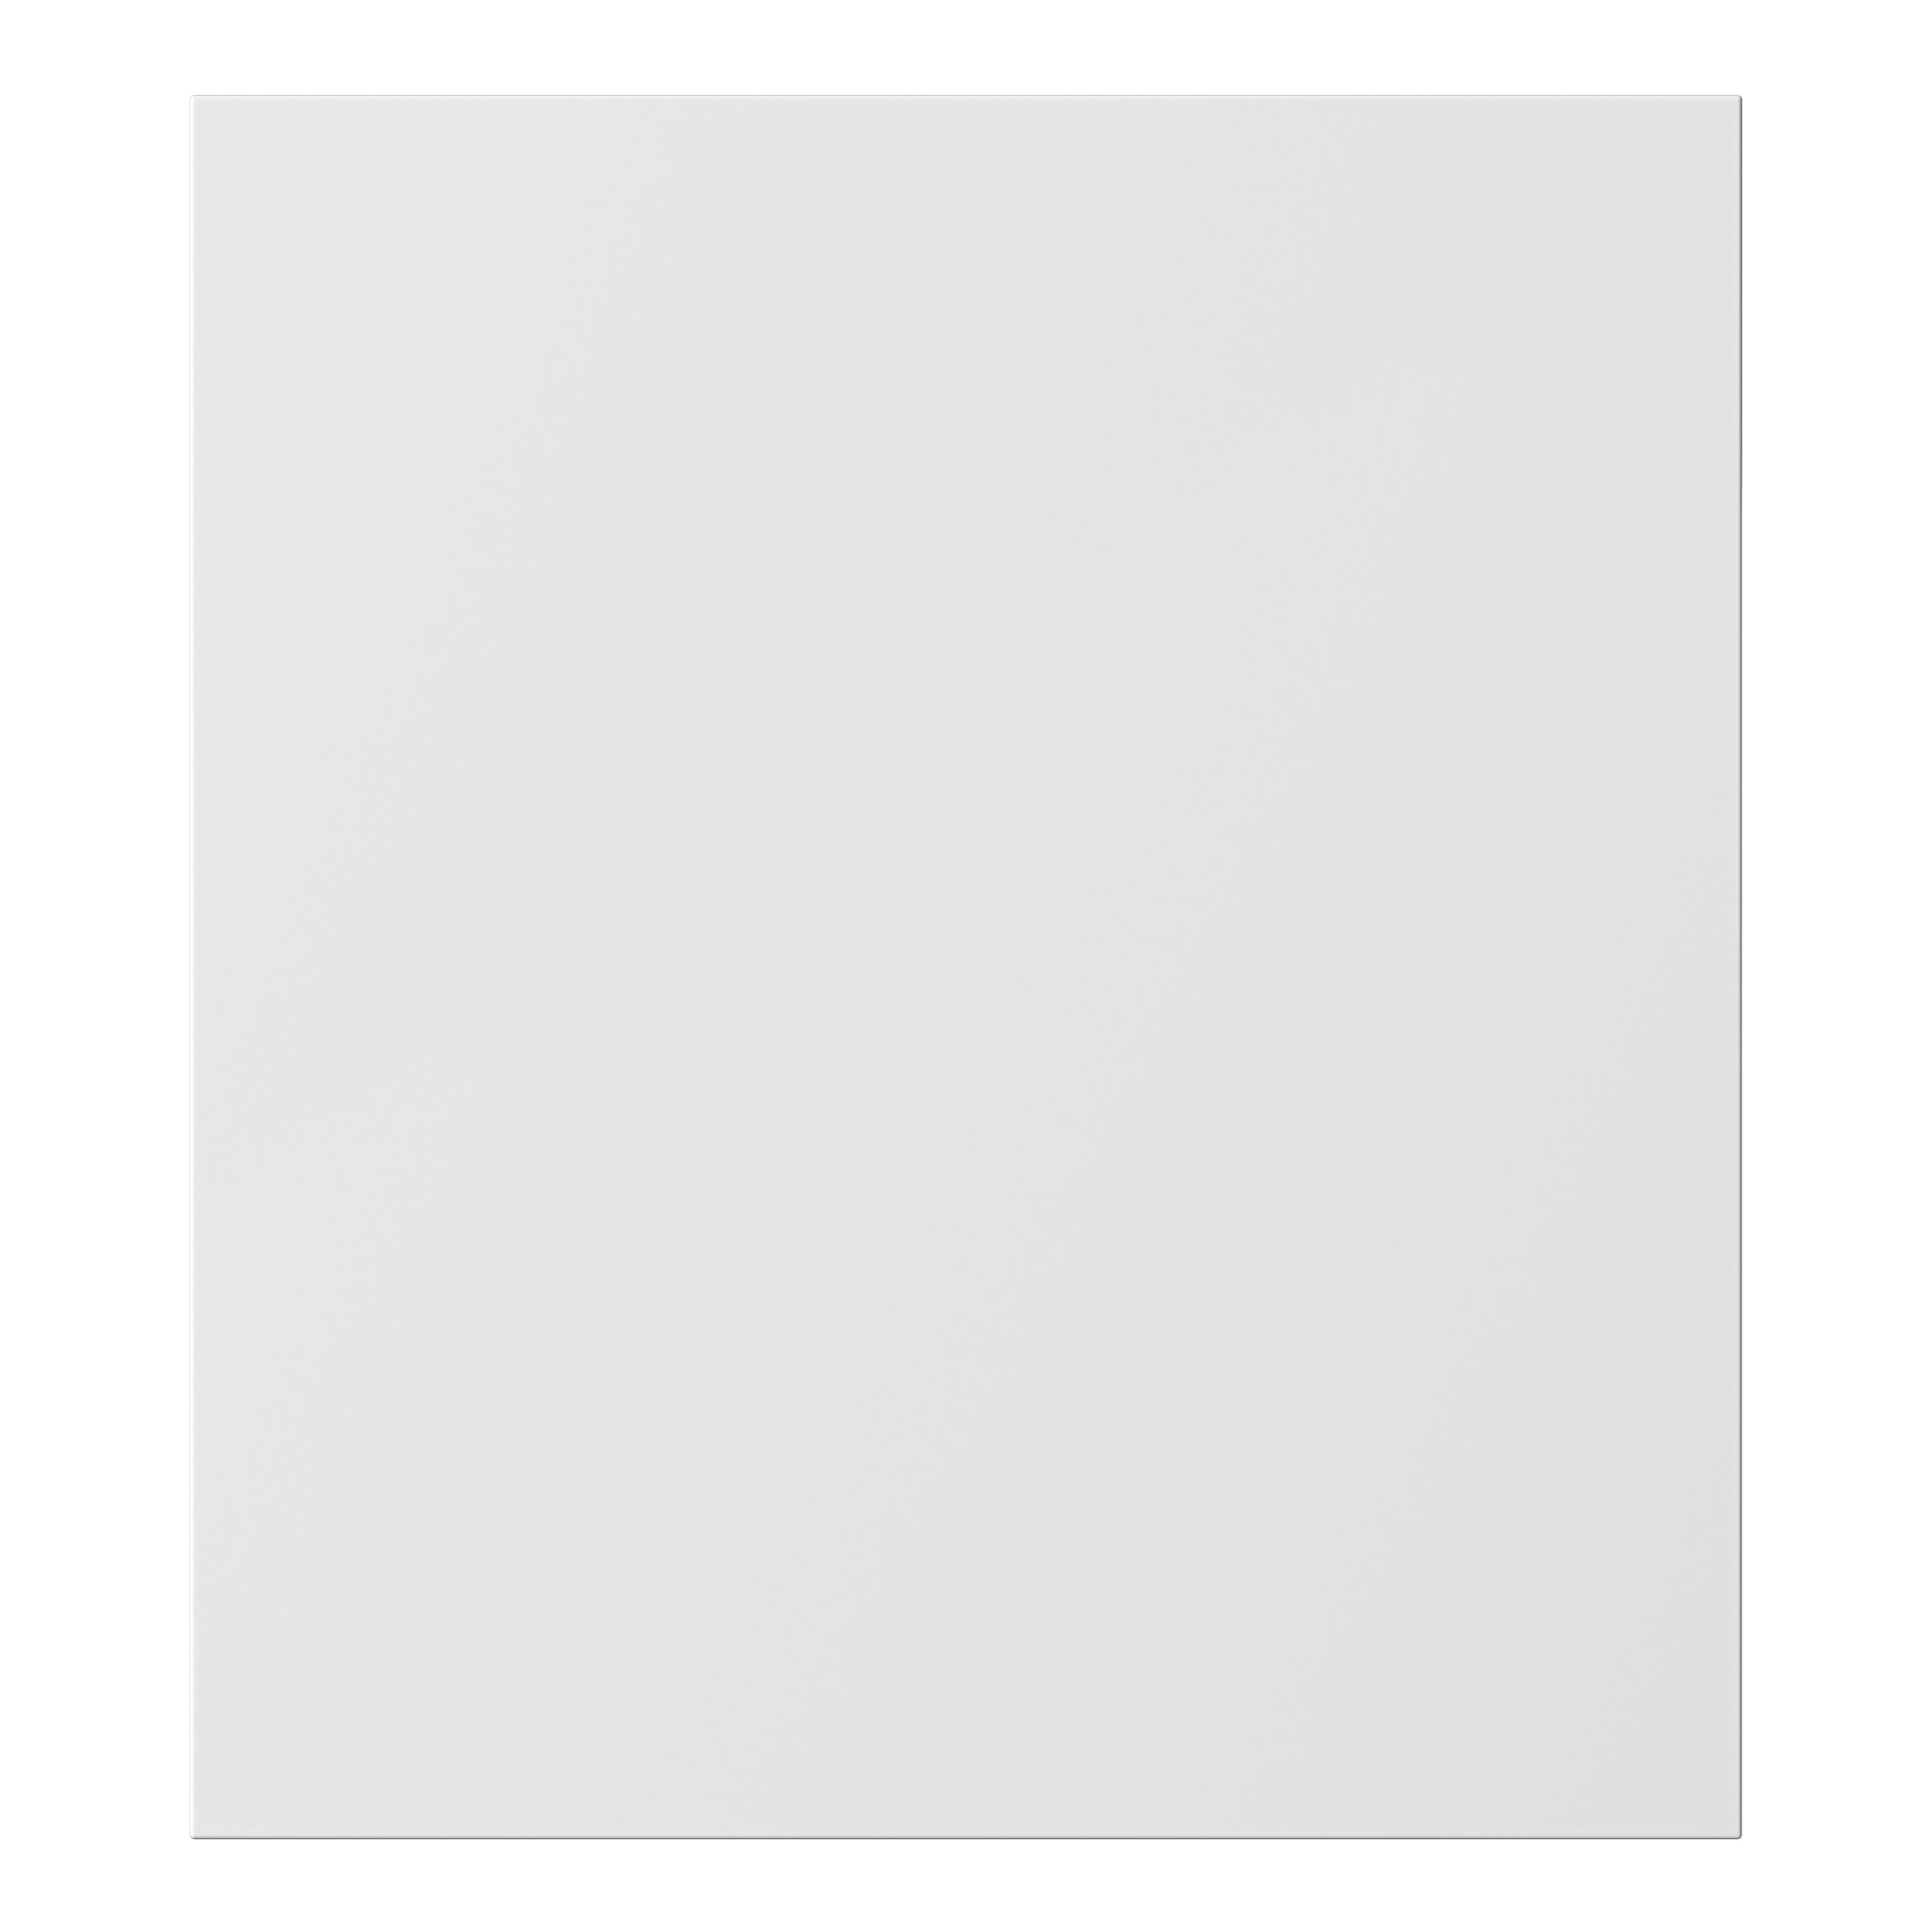 GoodHome Alisma High gloss white Drawer front, bridging door & bi fold door, (W)300mm (H)340mm (T)18mm